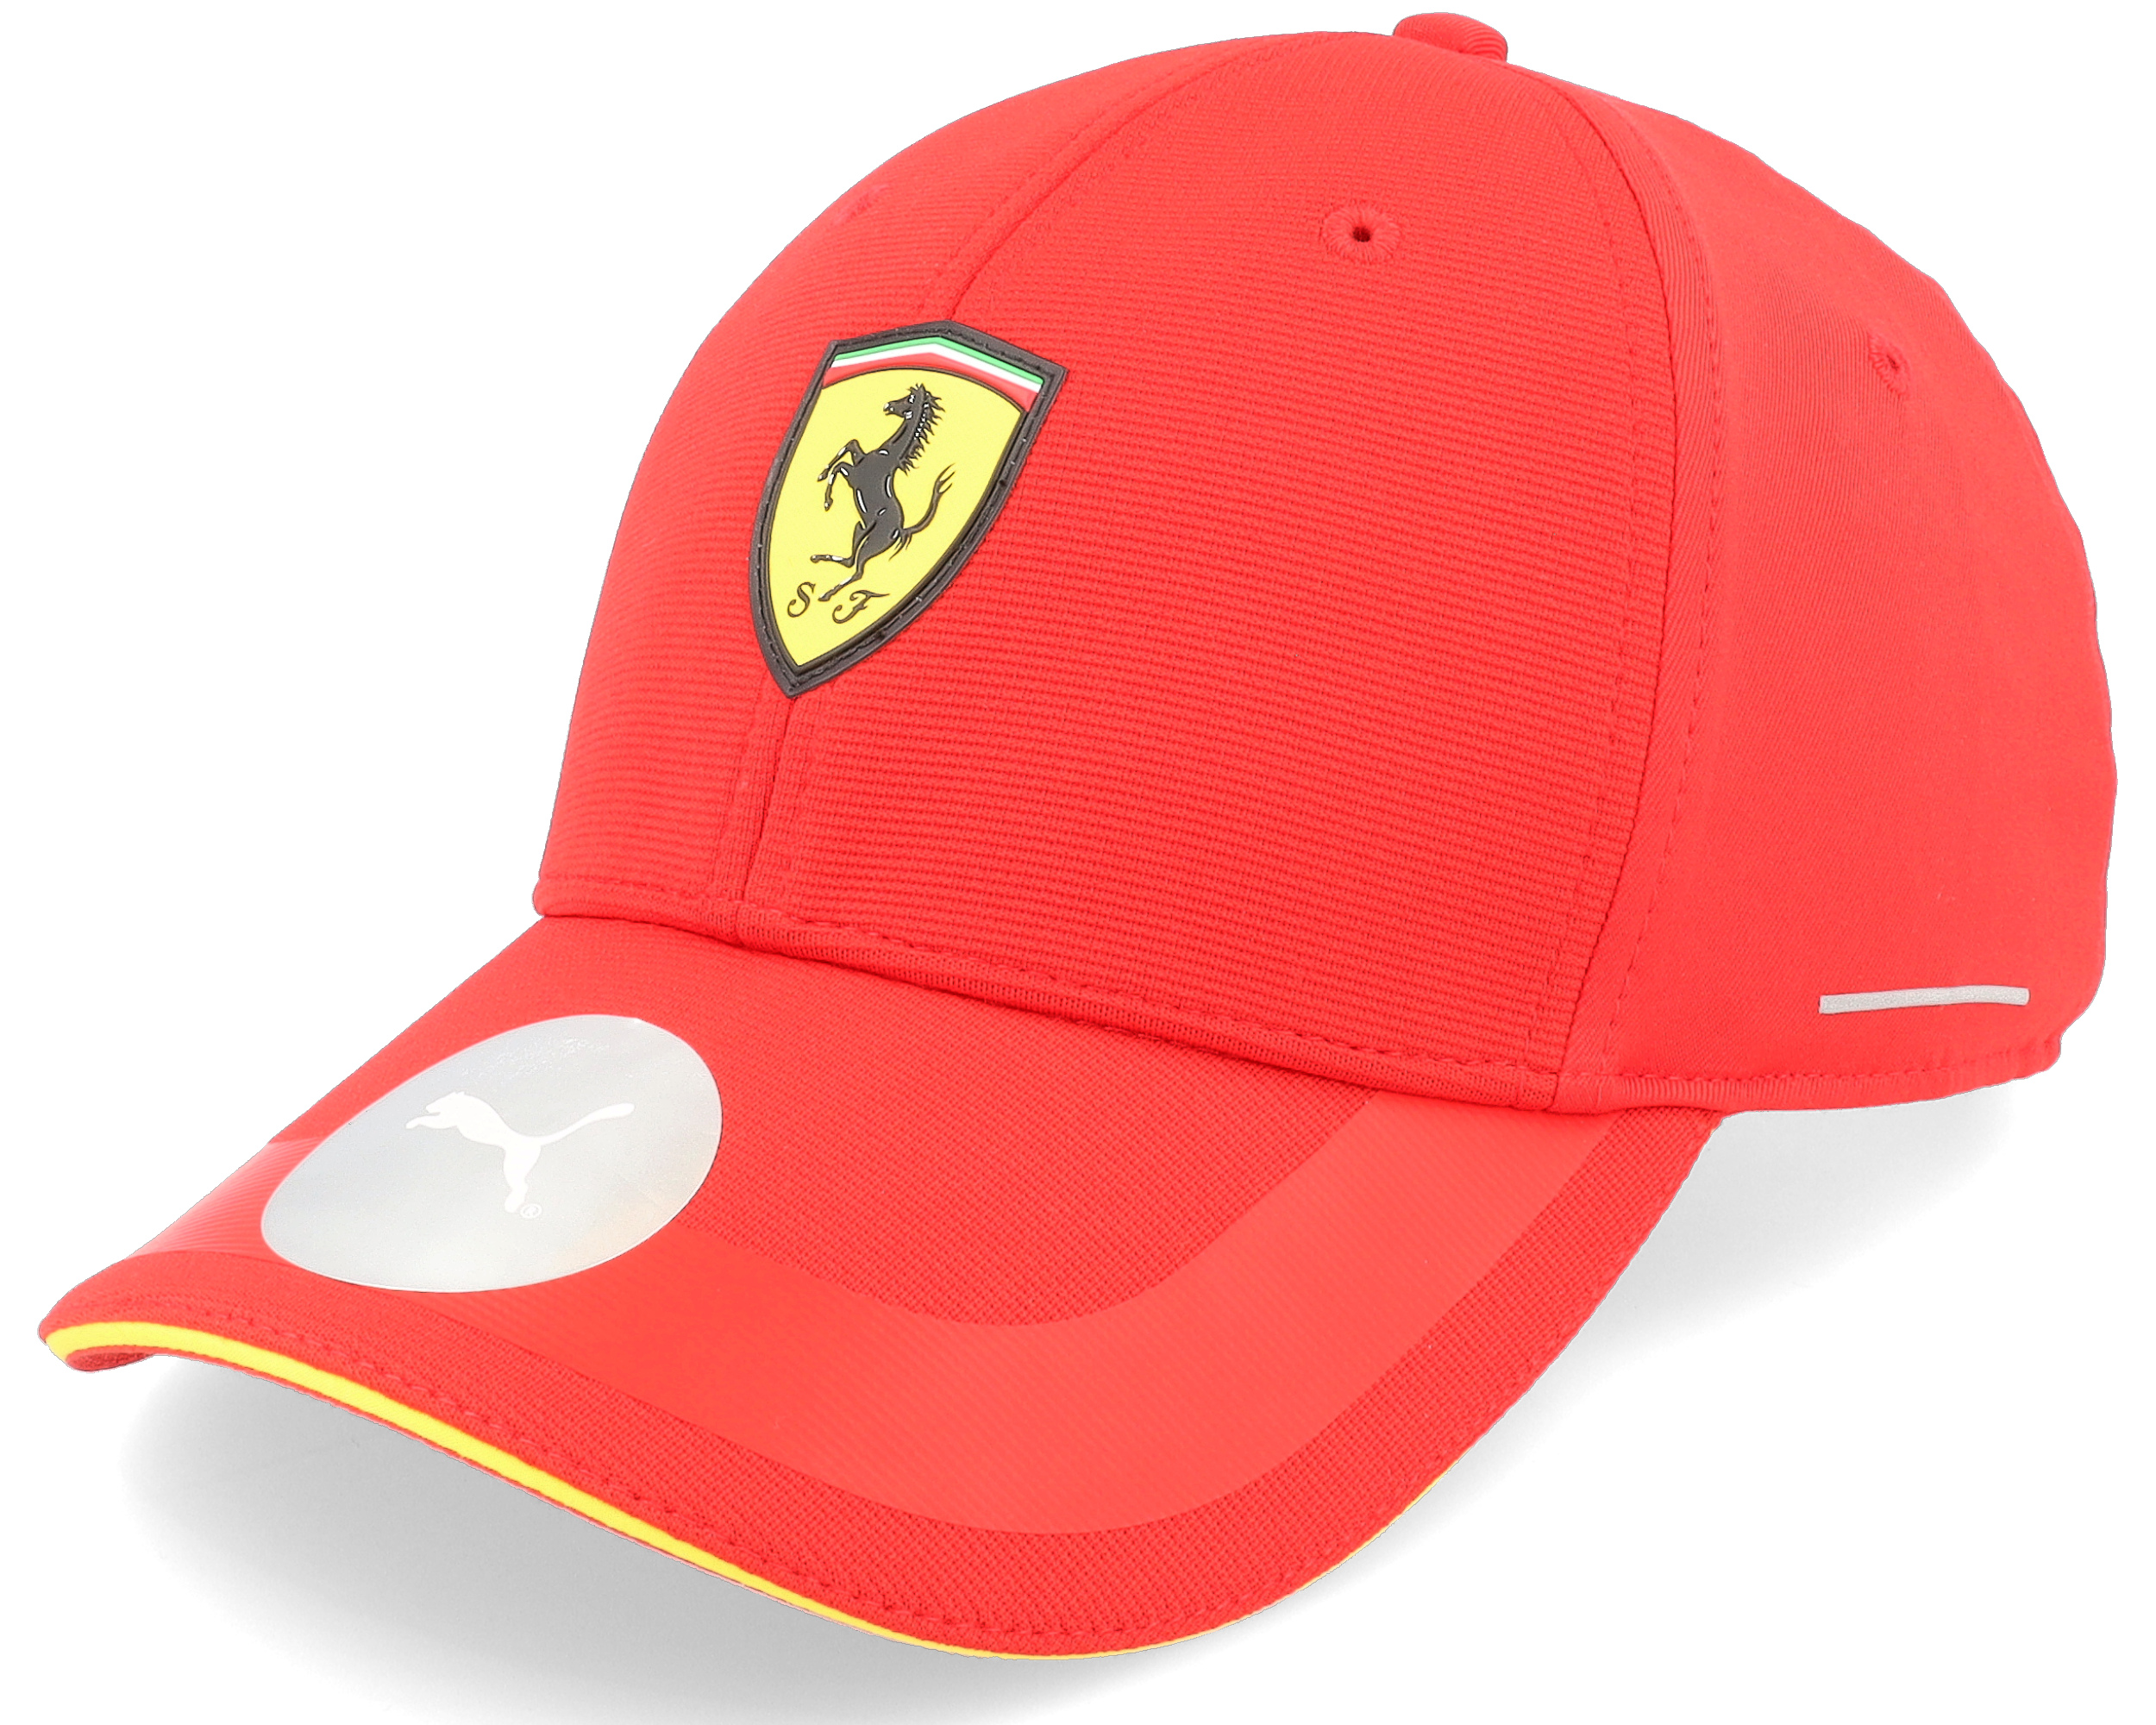 Ferrari F1 Tech Red Adjustable Formula One cap